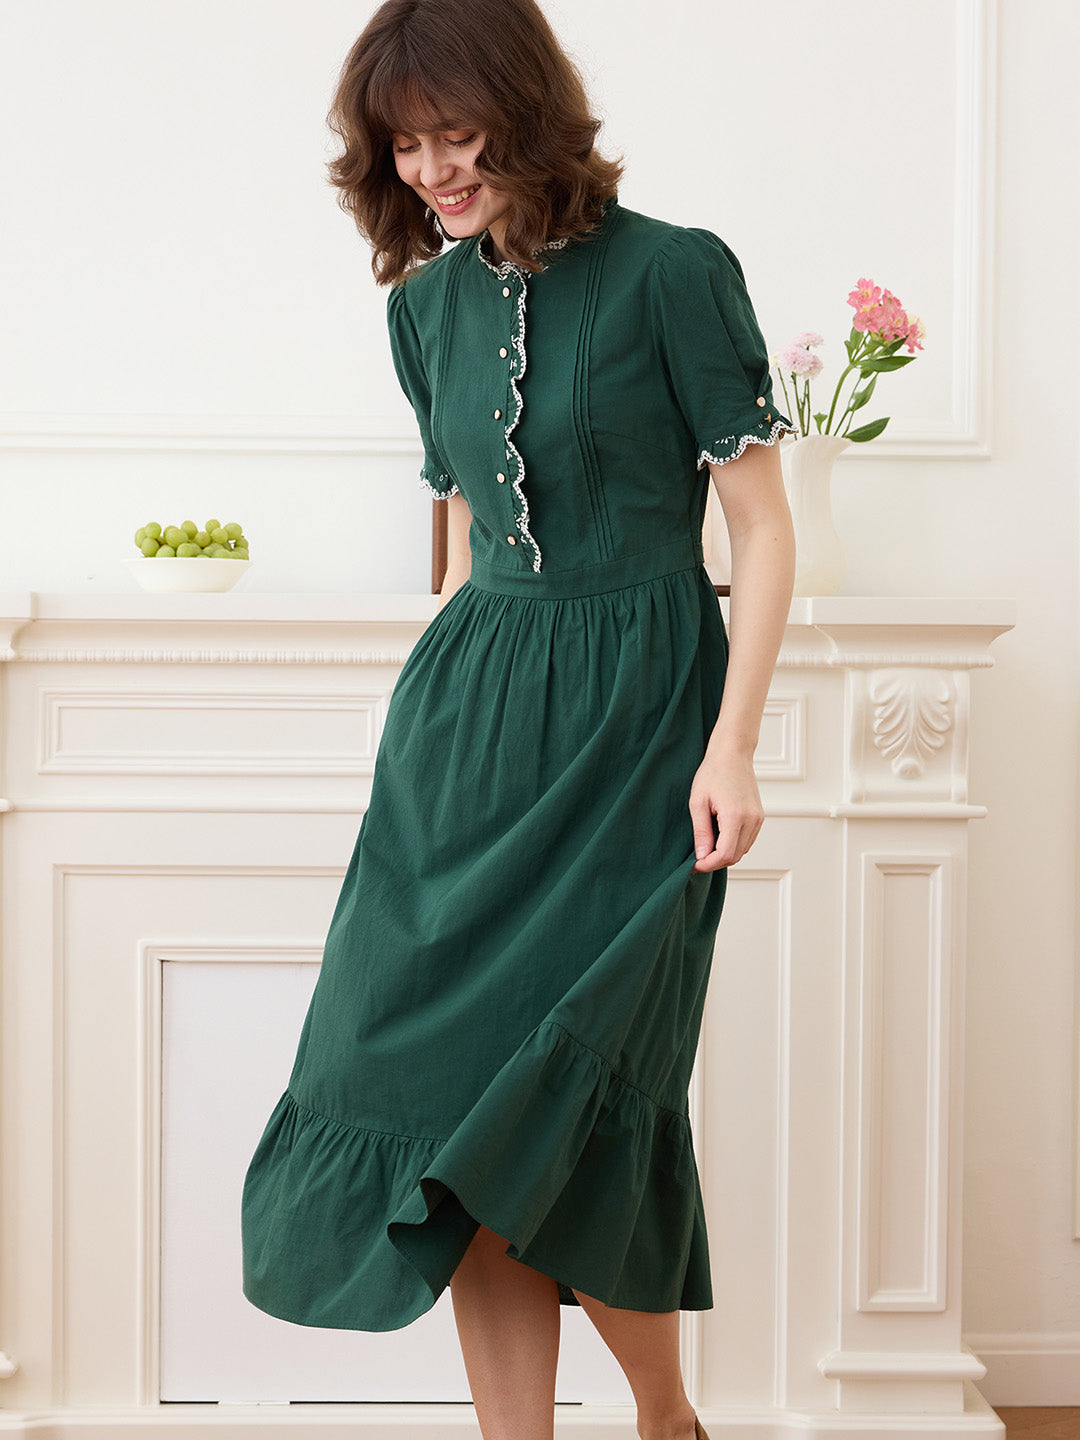 Romina 復古刺繡花邊綠色連衣裙